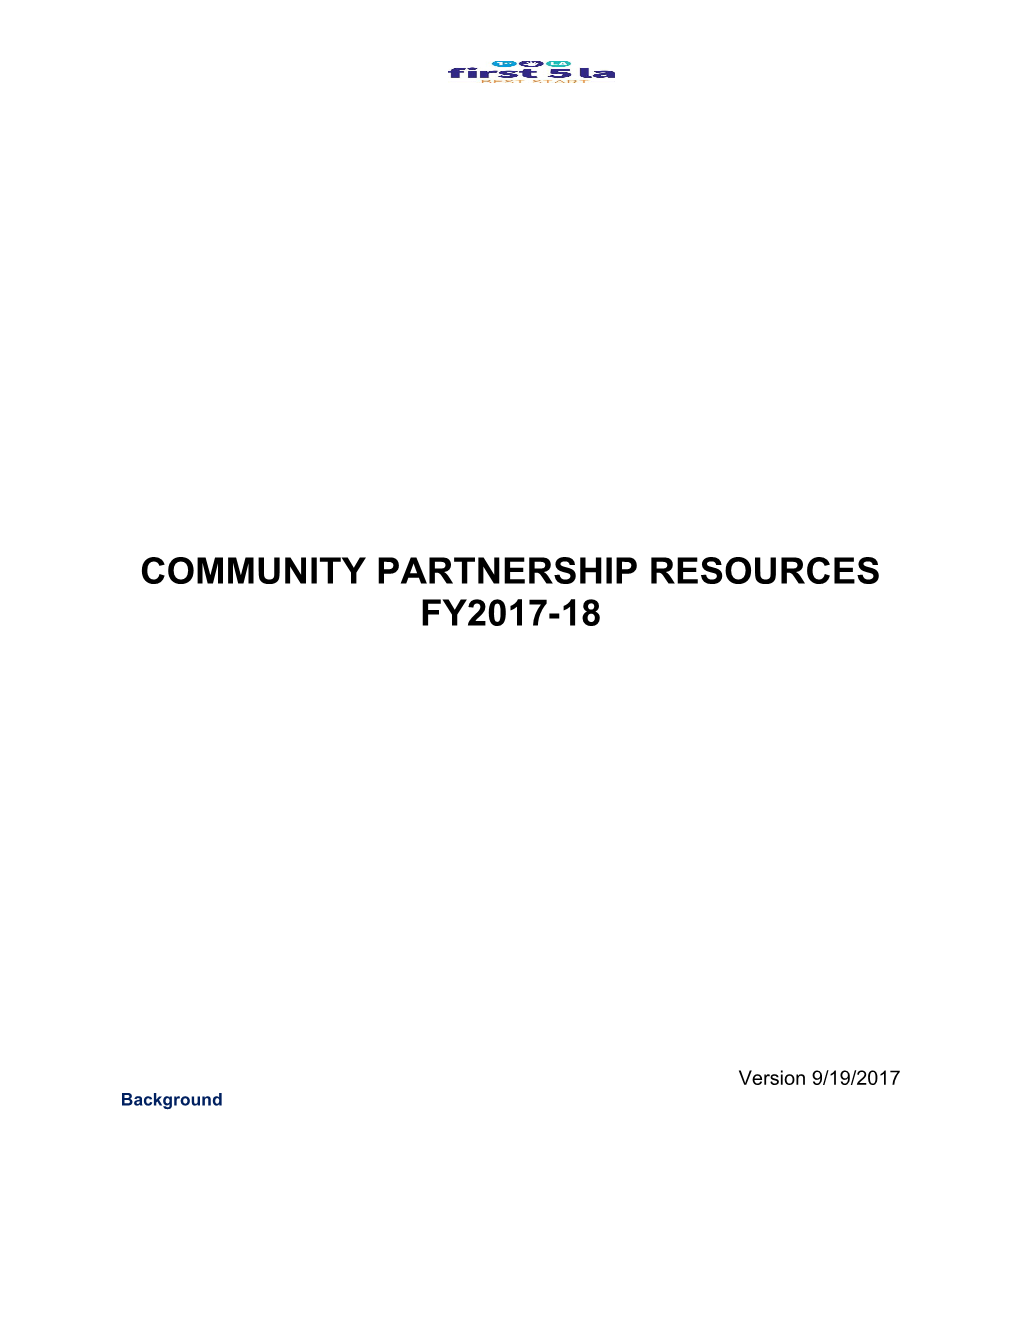 Community Partnership Resources